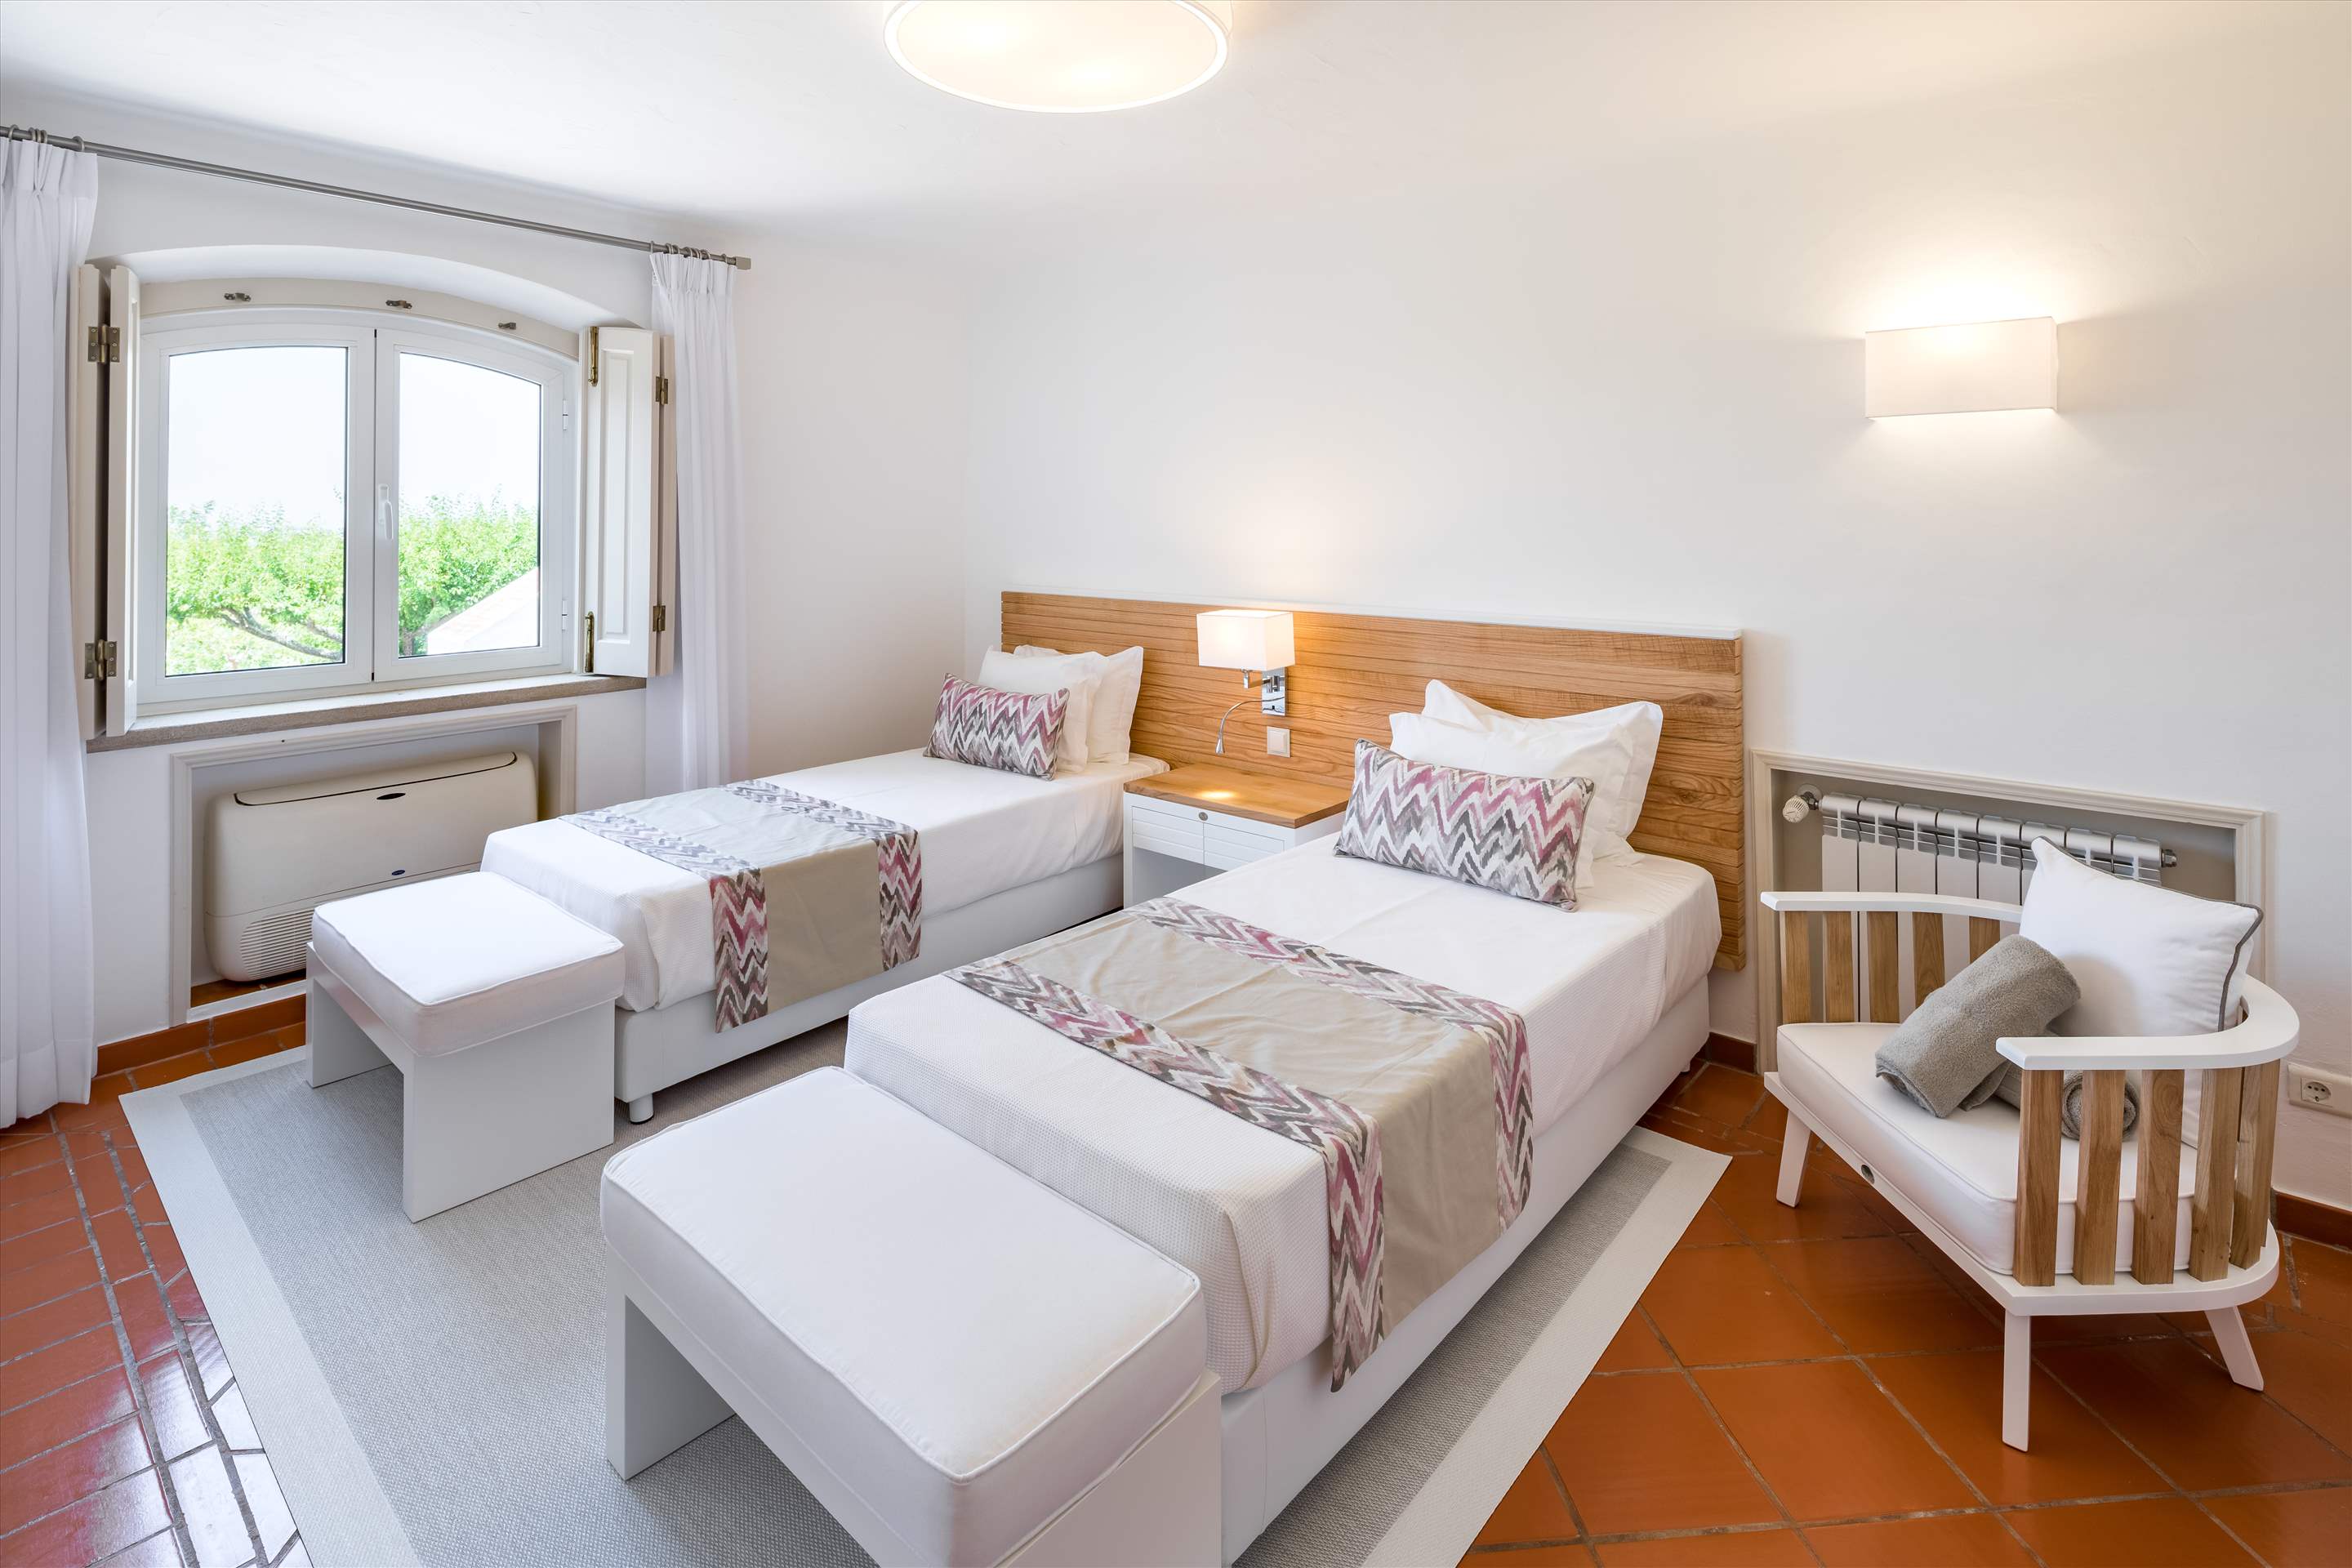 Casa da Montanha, 15-16 persons, 9 bedroom villa in Vilamoura Area, Algarve Photo #29